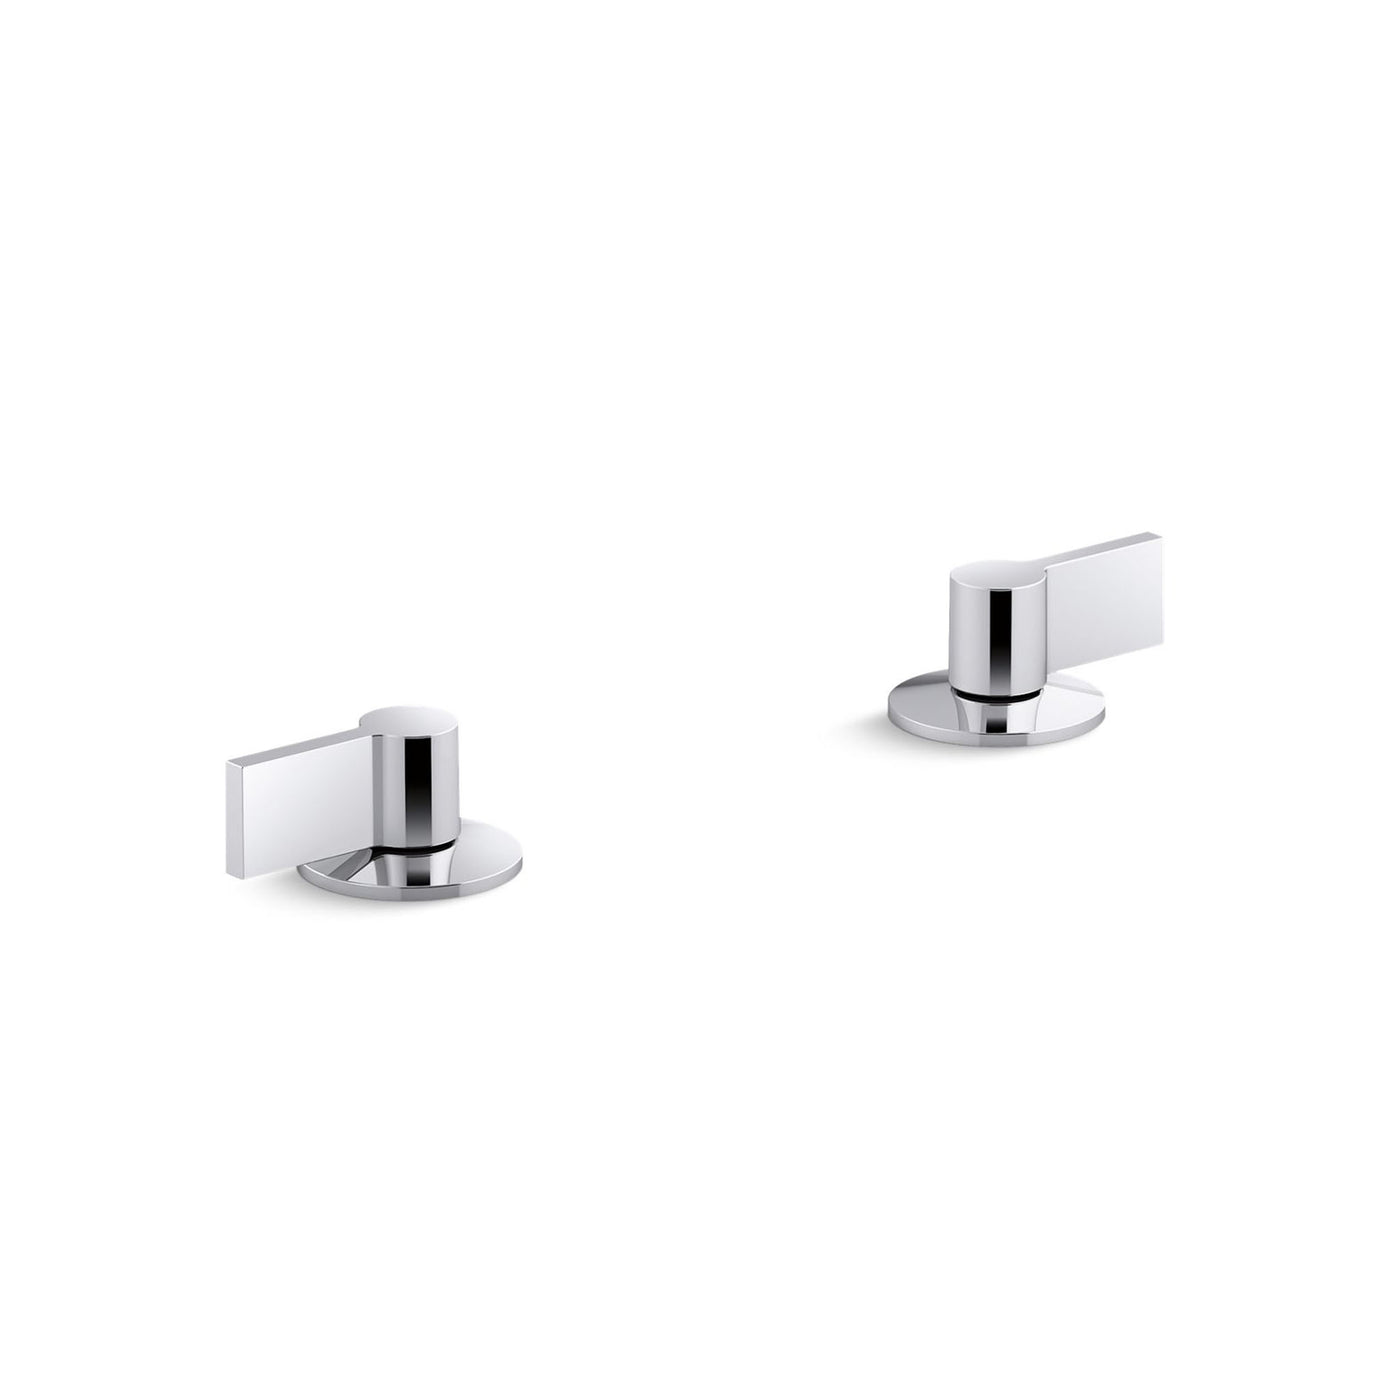 Components® Lever bathroom sink faucet handles